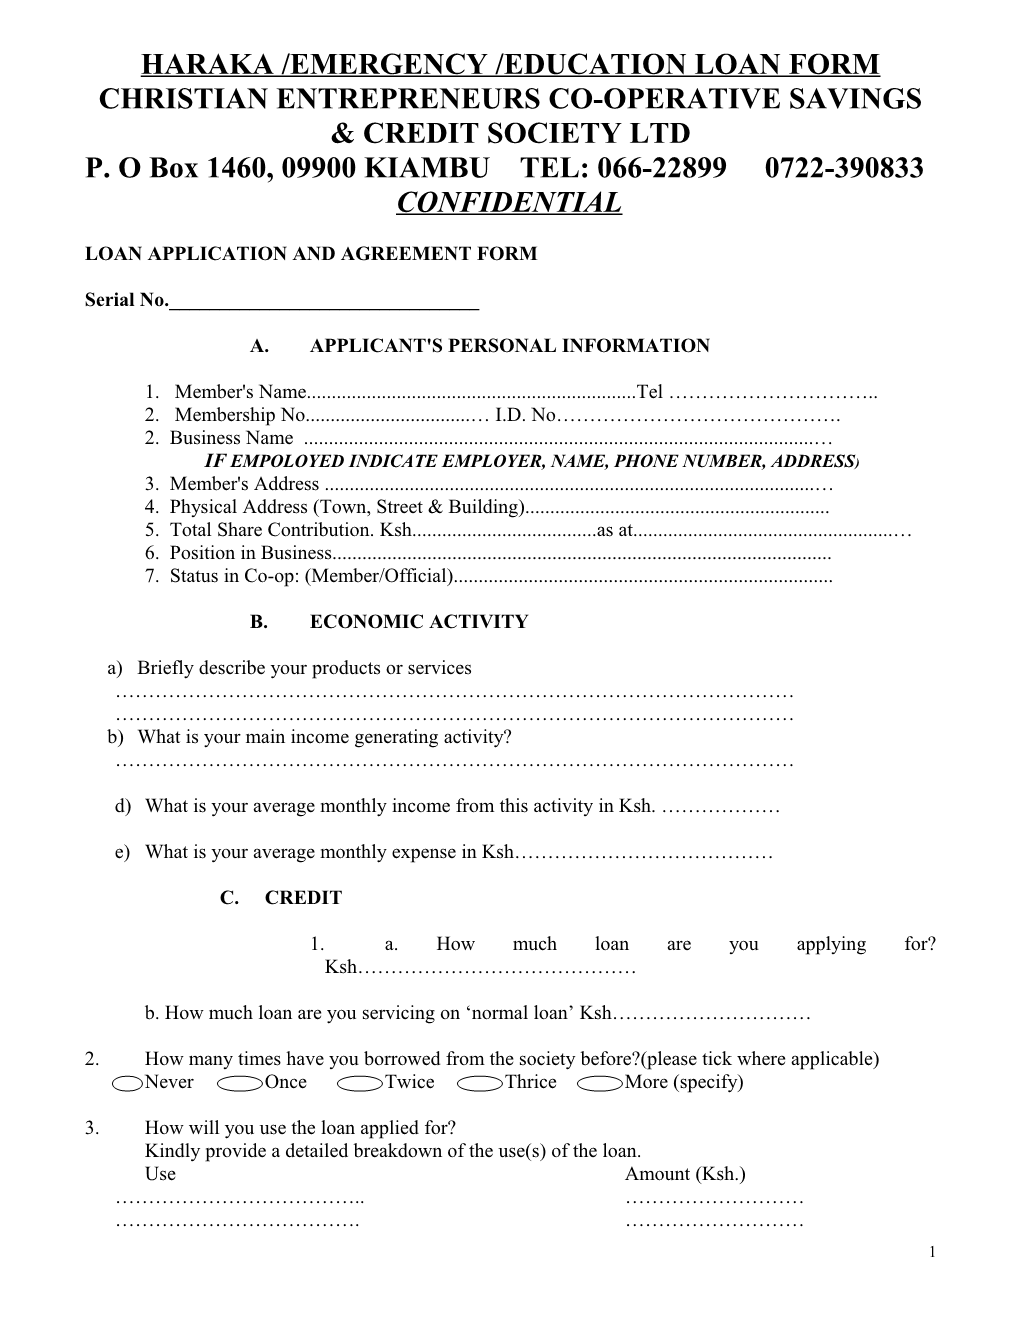 Haraka /Emergency /Education Loan Form